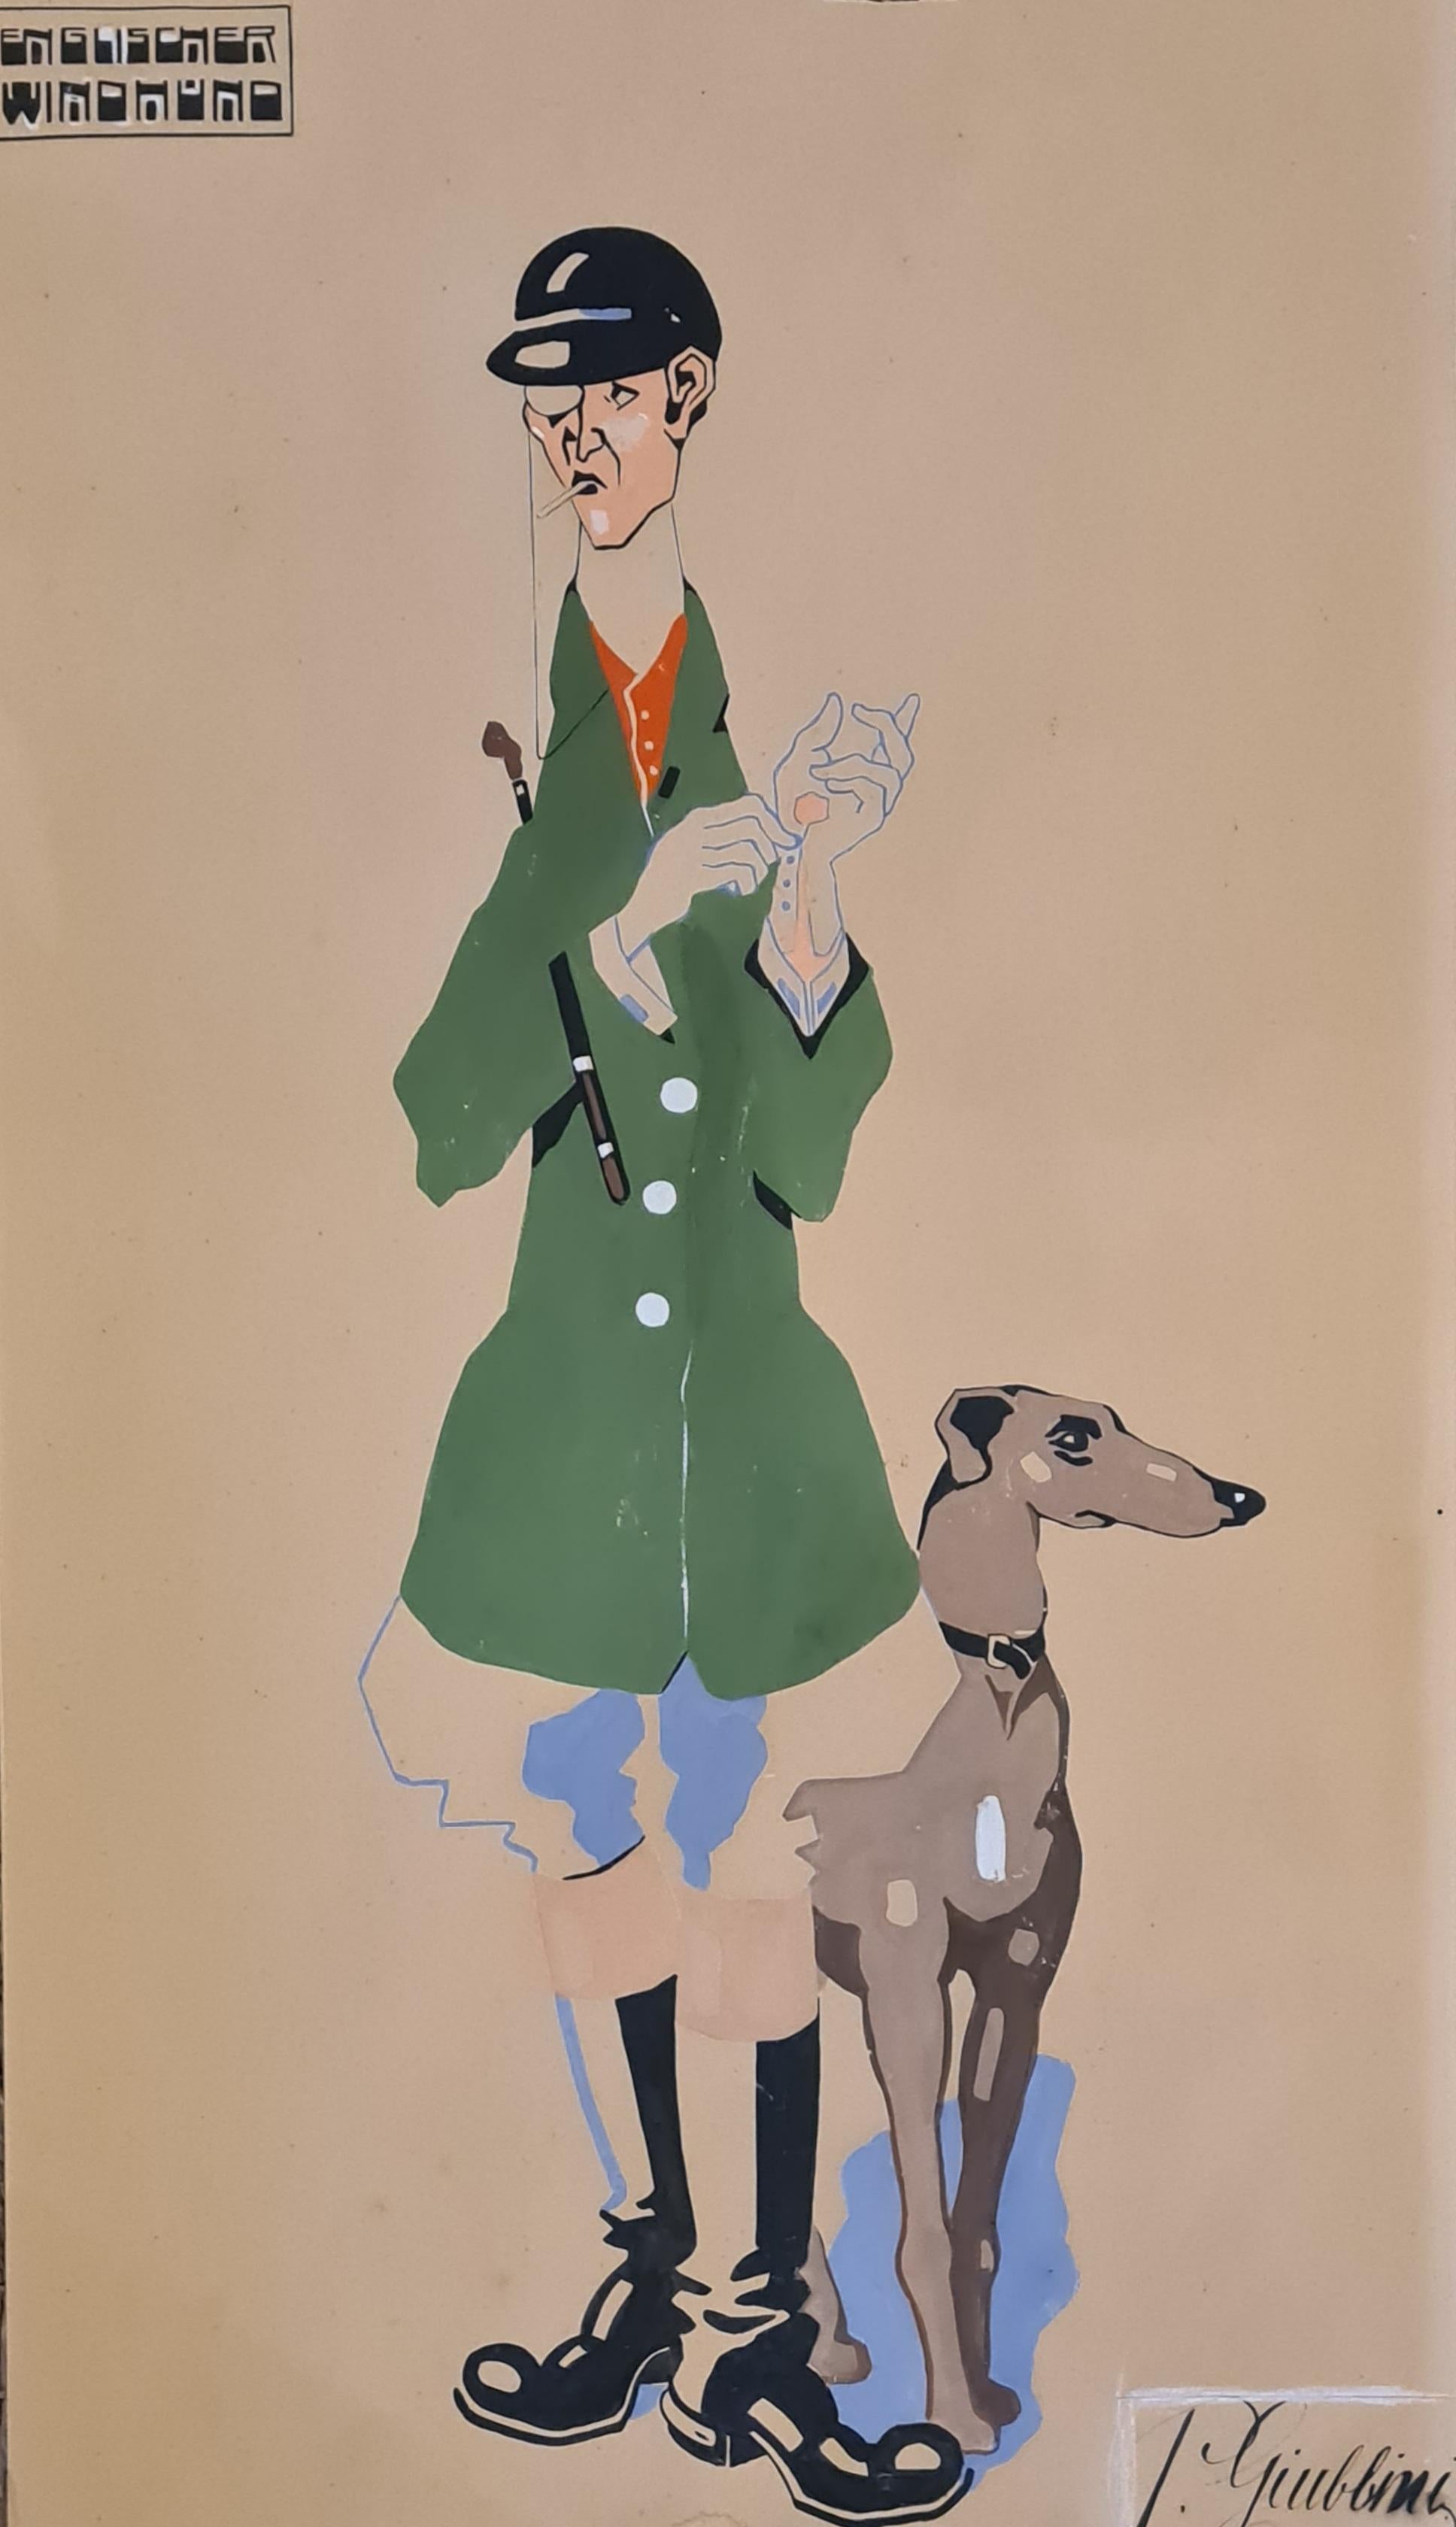 Englischer Windhund and Preussischer Landjuncker. 2 Art Deco Gouache Portraits  - Painting by P Giubbini